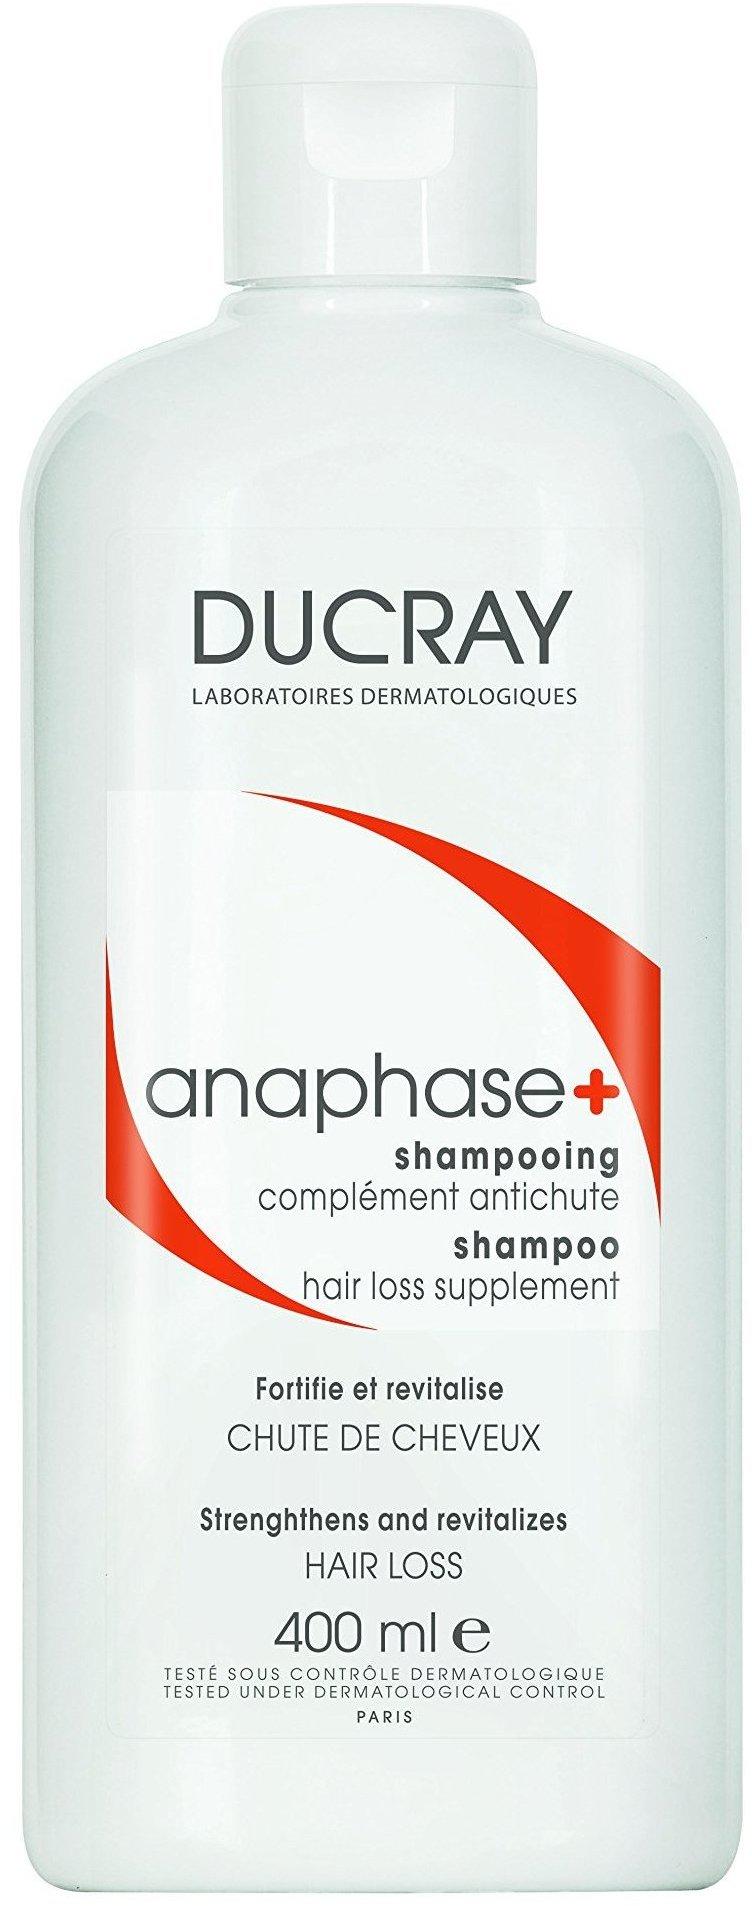 Ducray anaphase+ Shampoo Haarausfall (400ml) Test ❤️ Testbericht.de Mai 2022